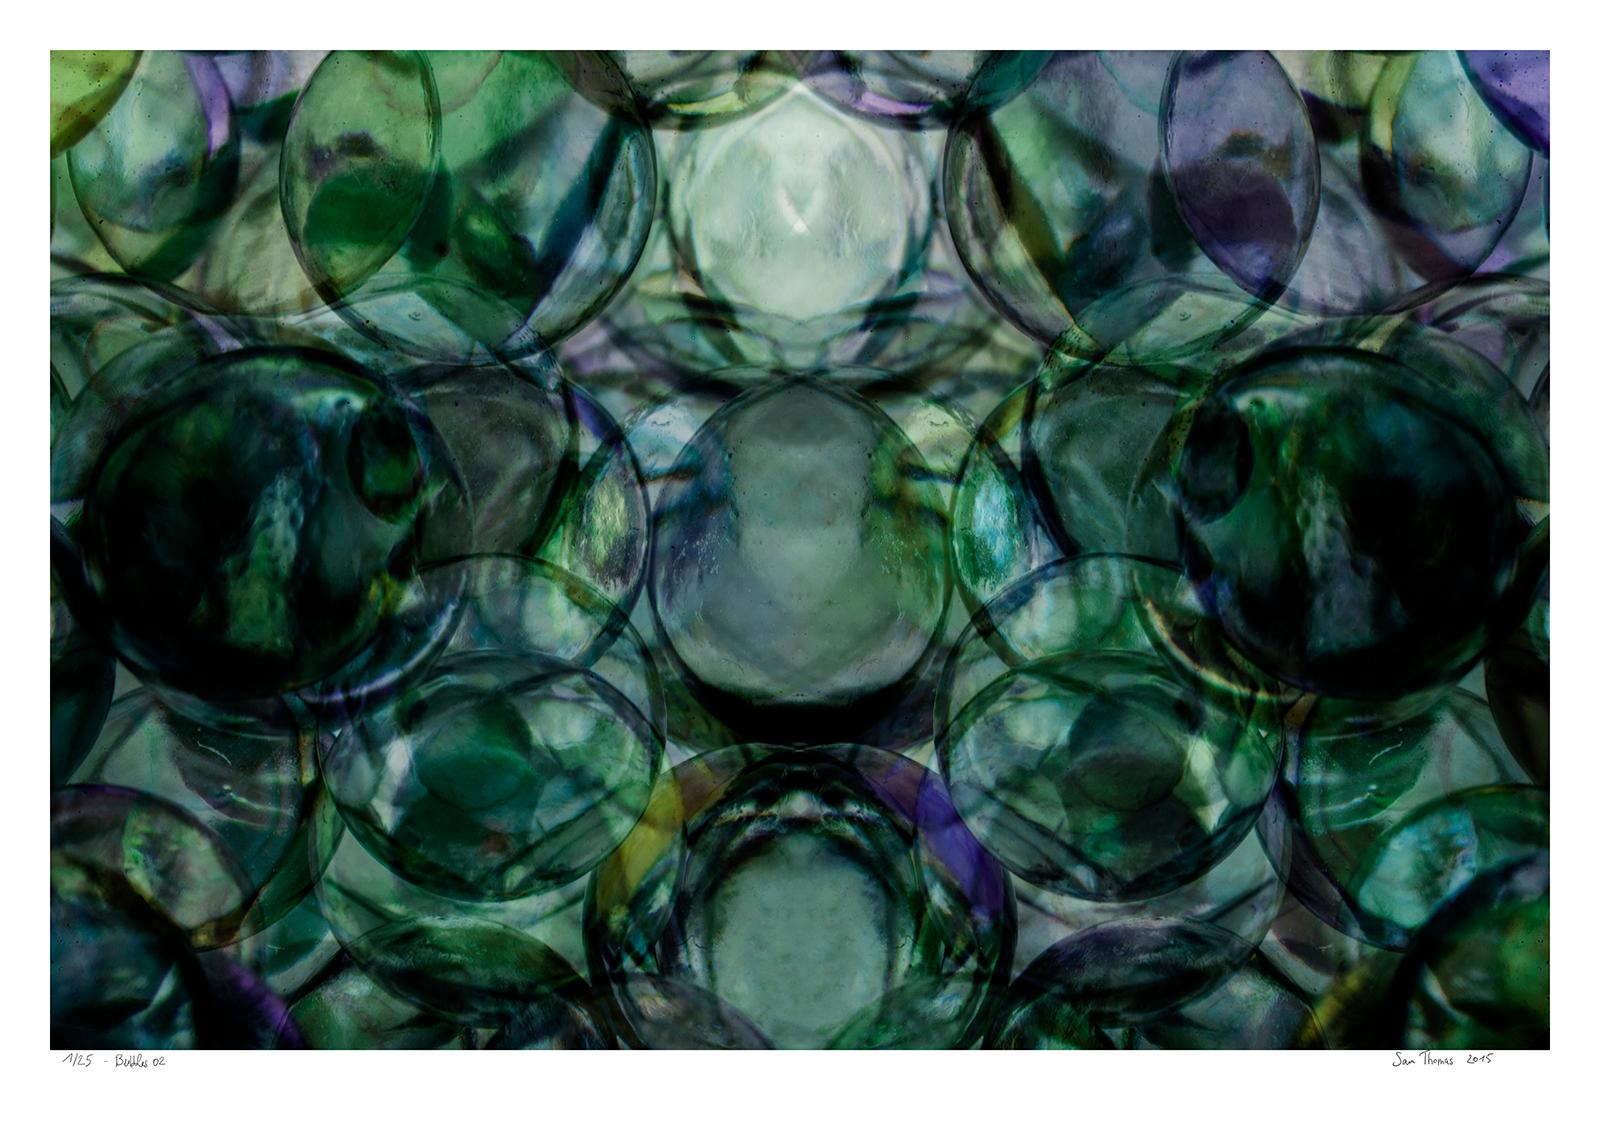 Sam Thomas Abstract Photograph – Bubbles 02 - Abstrakte Farbfotografie, Druck in limitierter Auflage